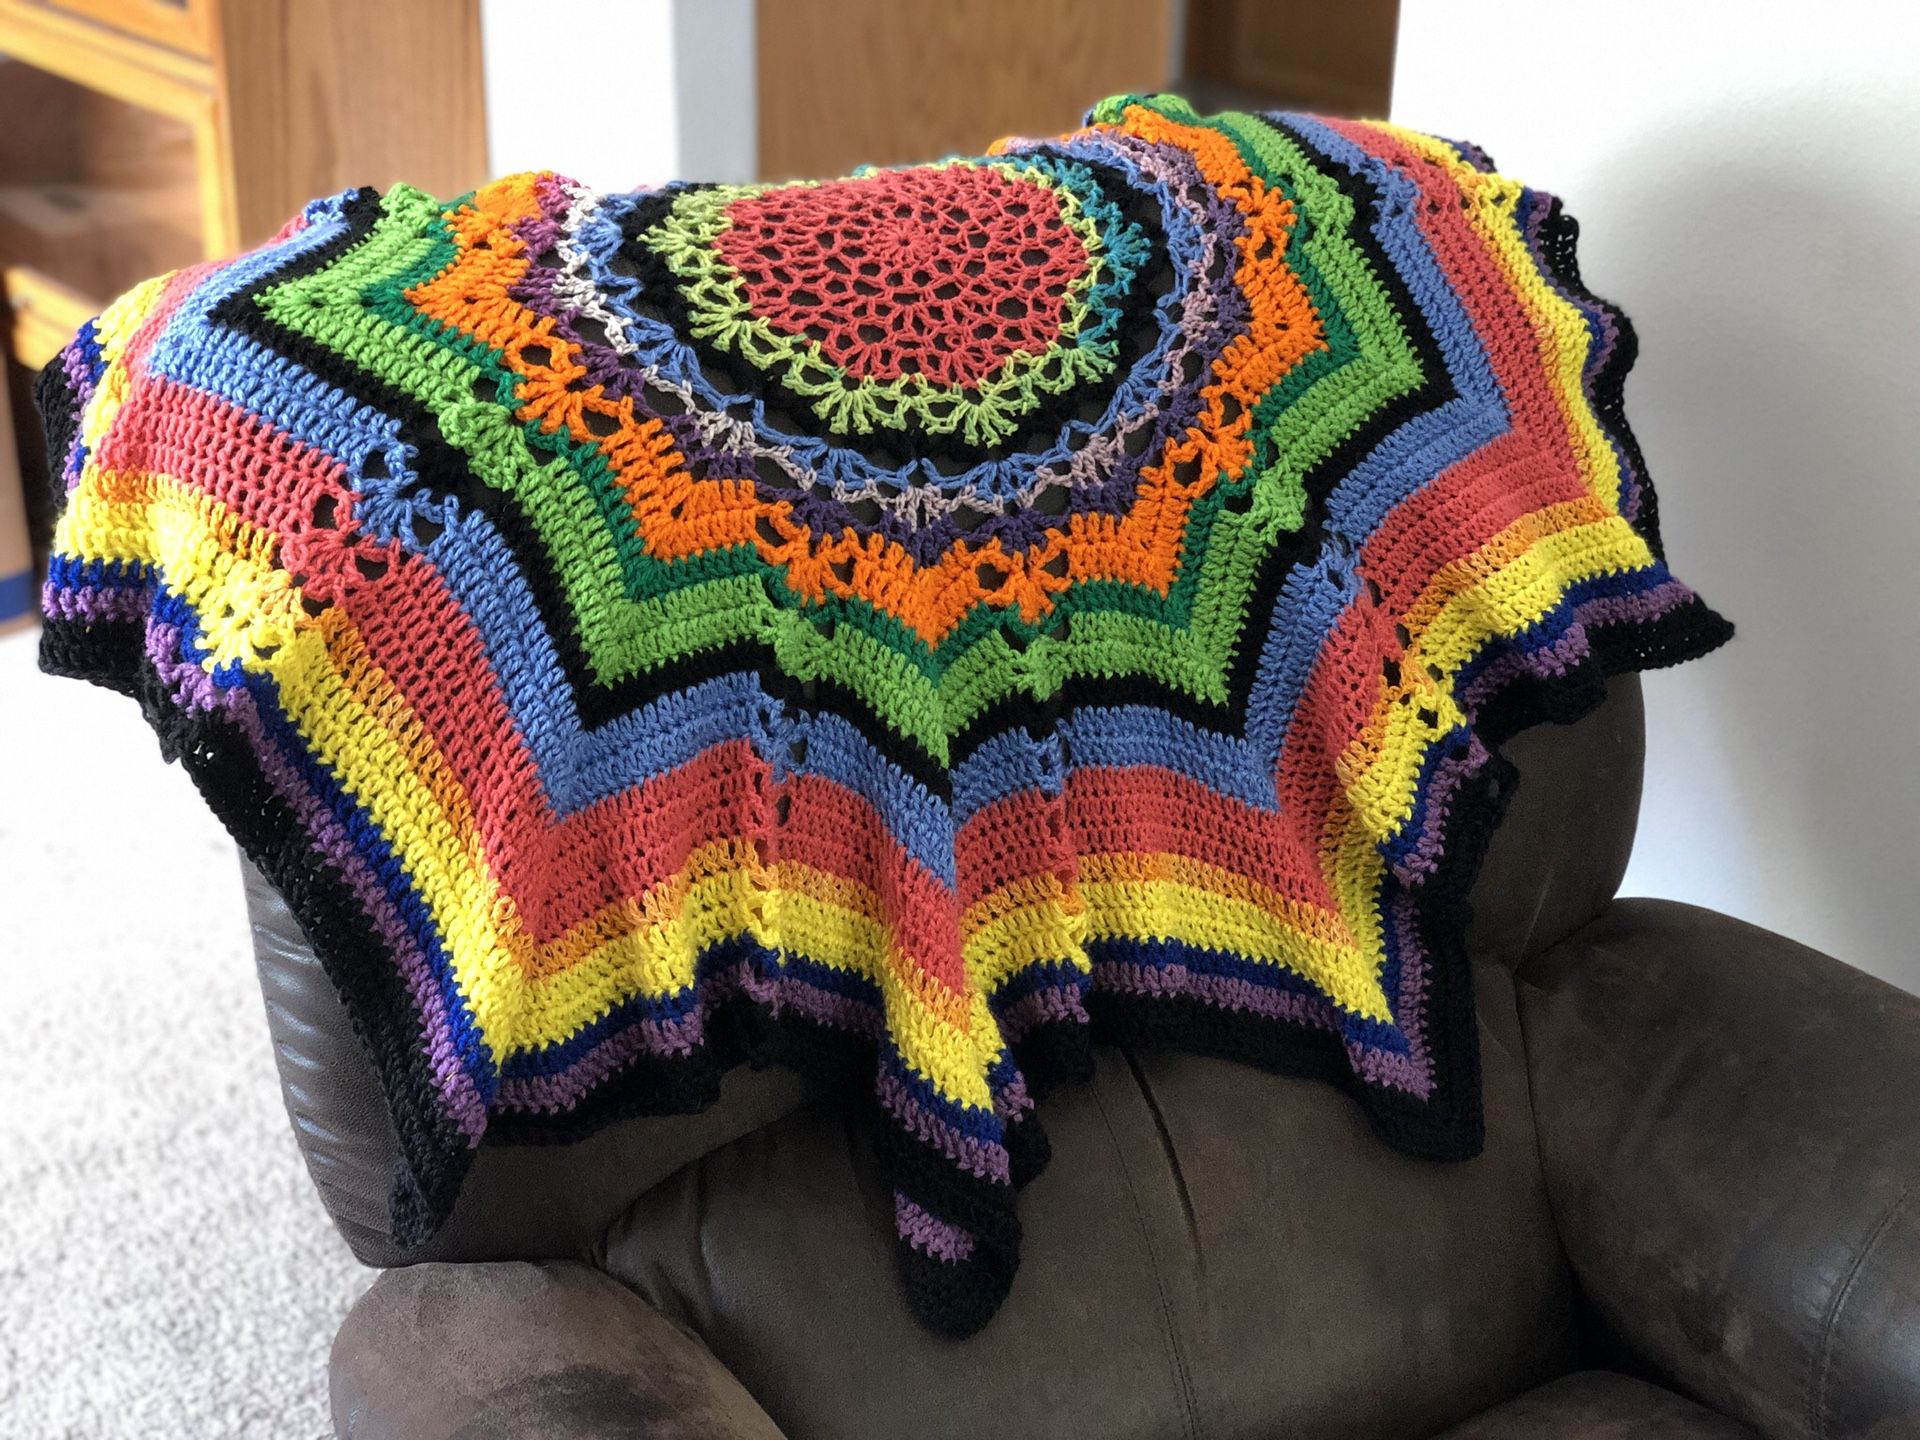 Hand crocheted baby blanket/throw